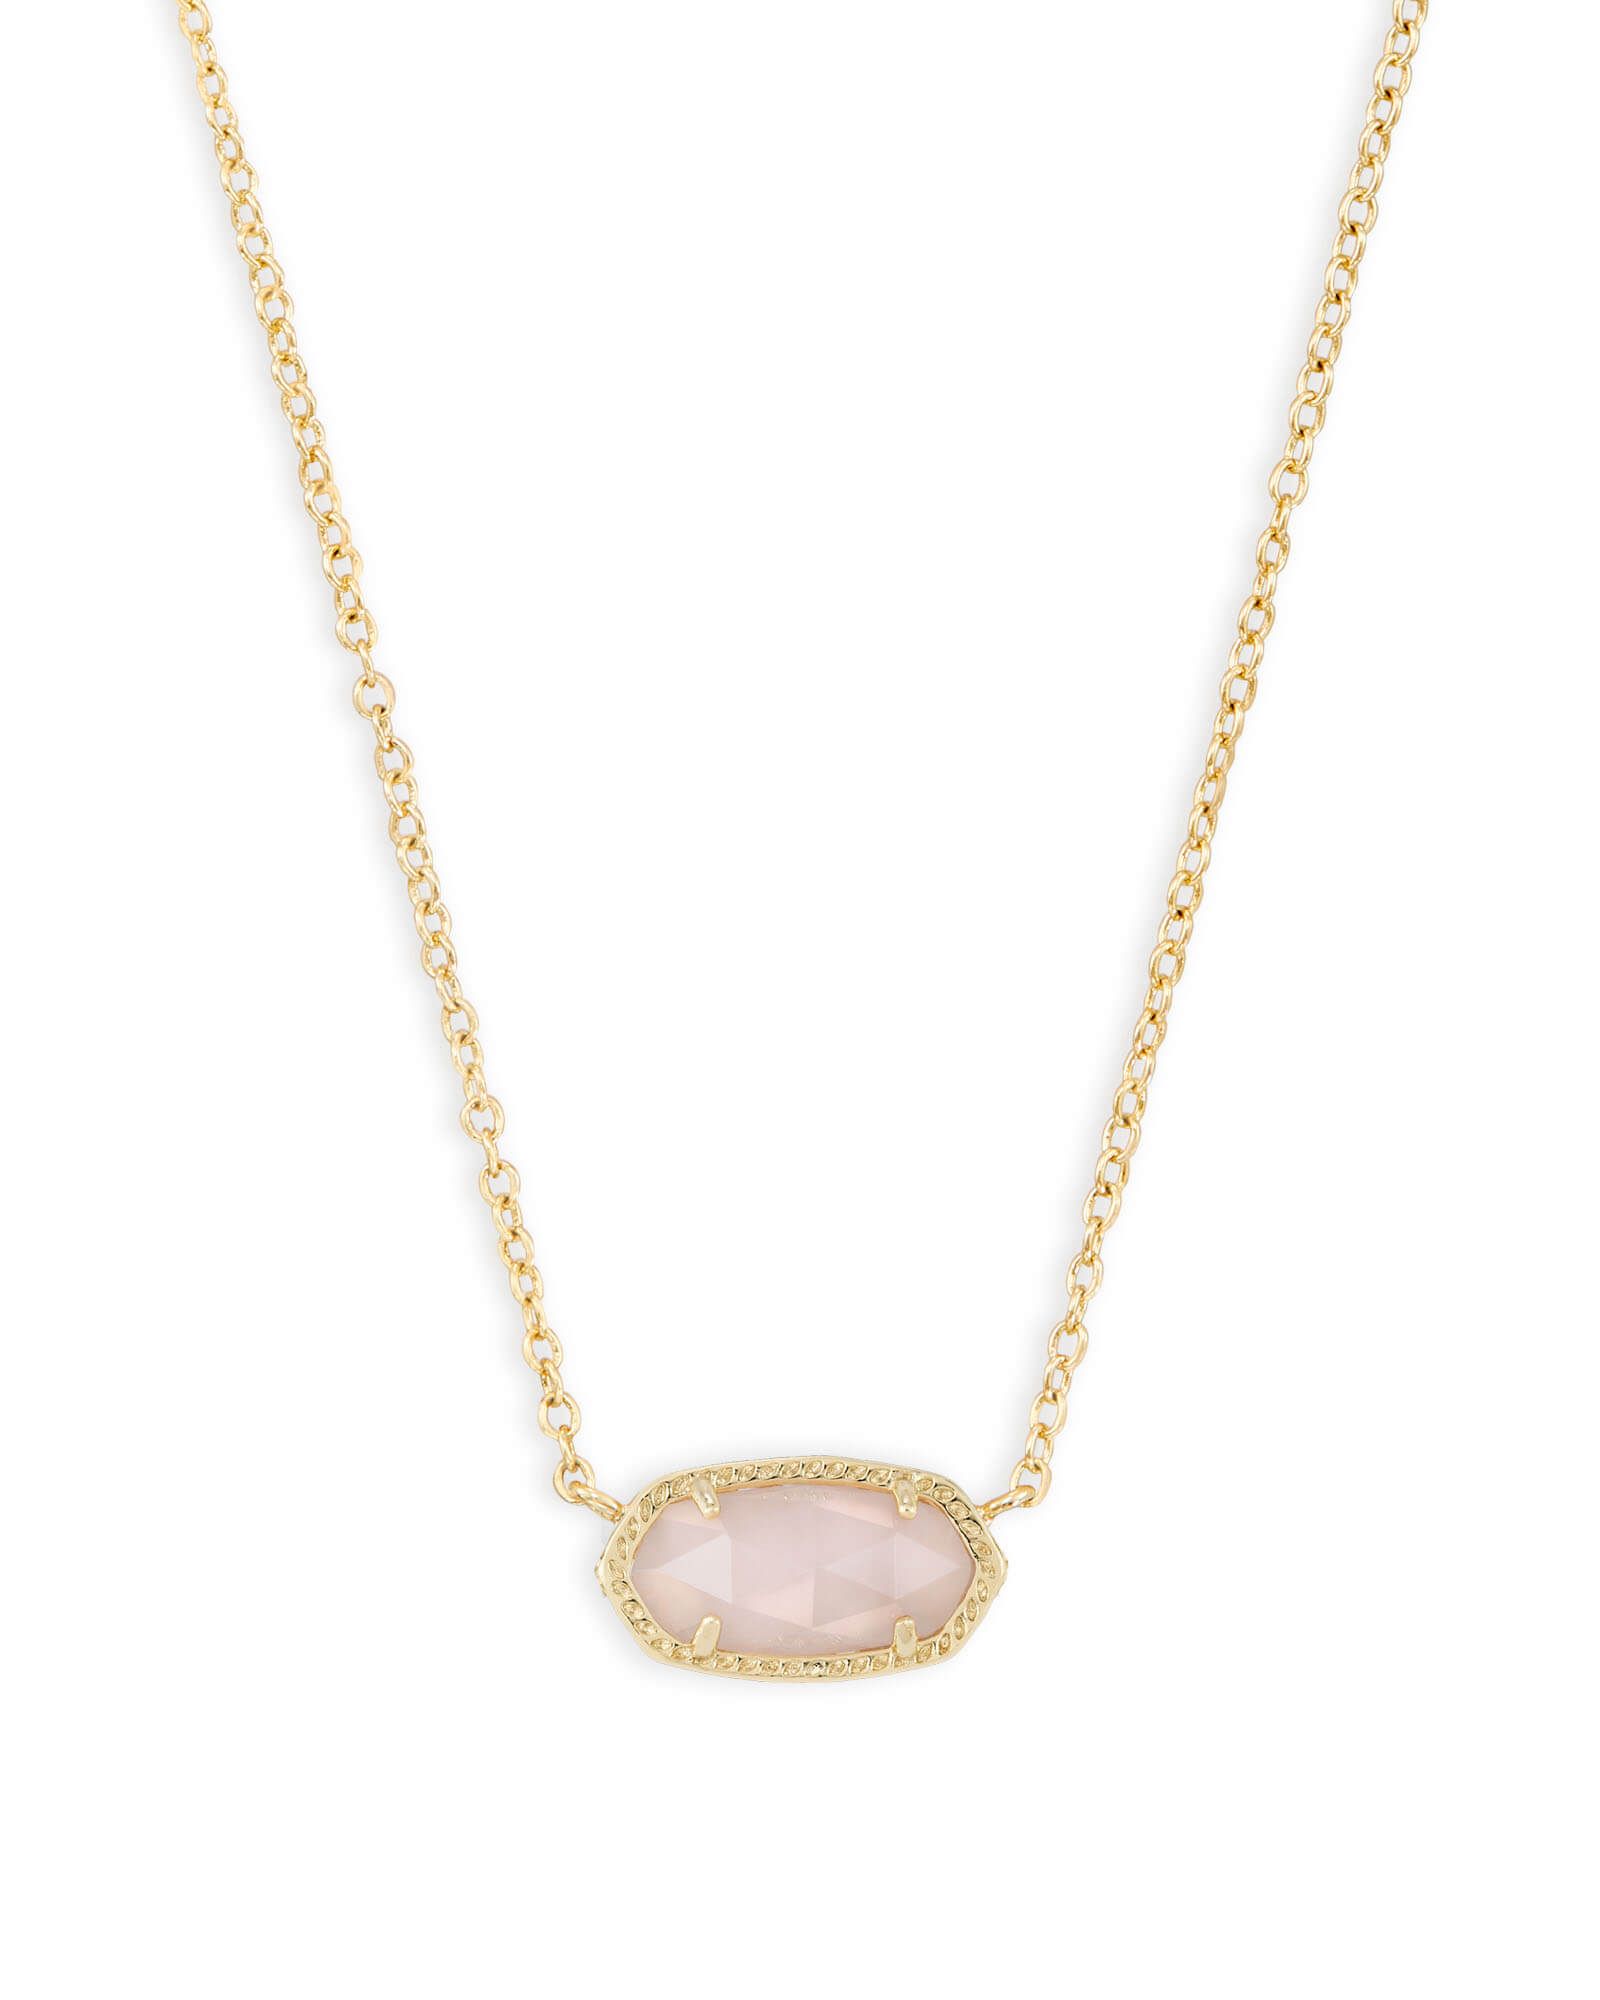 Elisa Gold Pendant Necklace in Rose Quartz | Kendra Scott | Kendra Scott